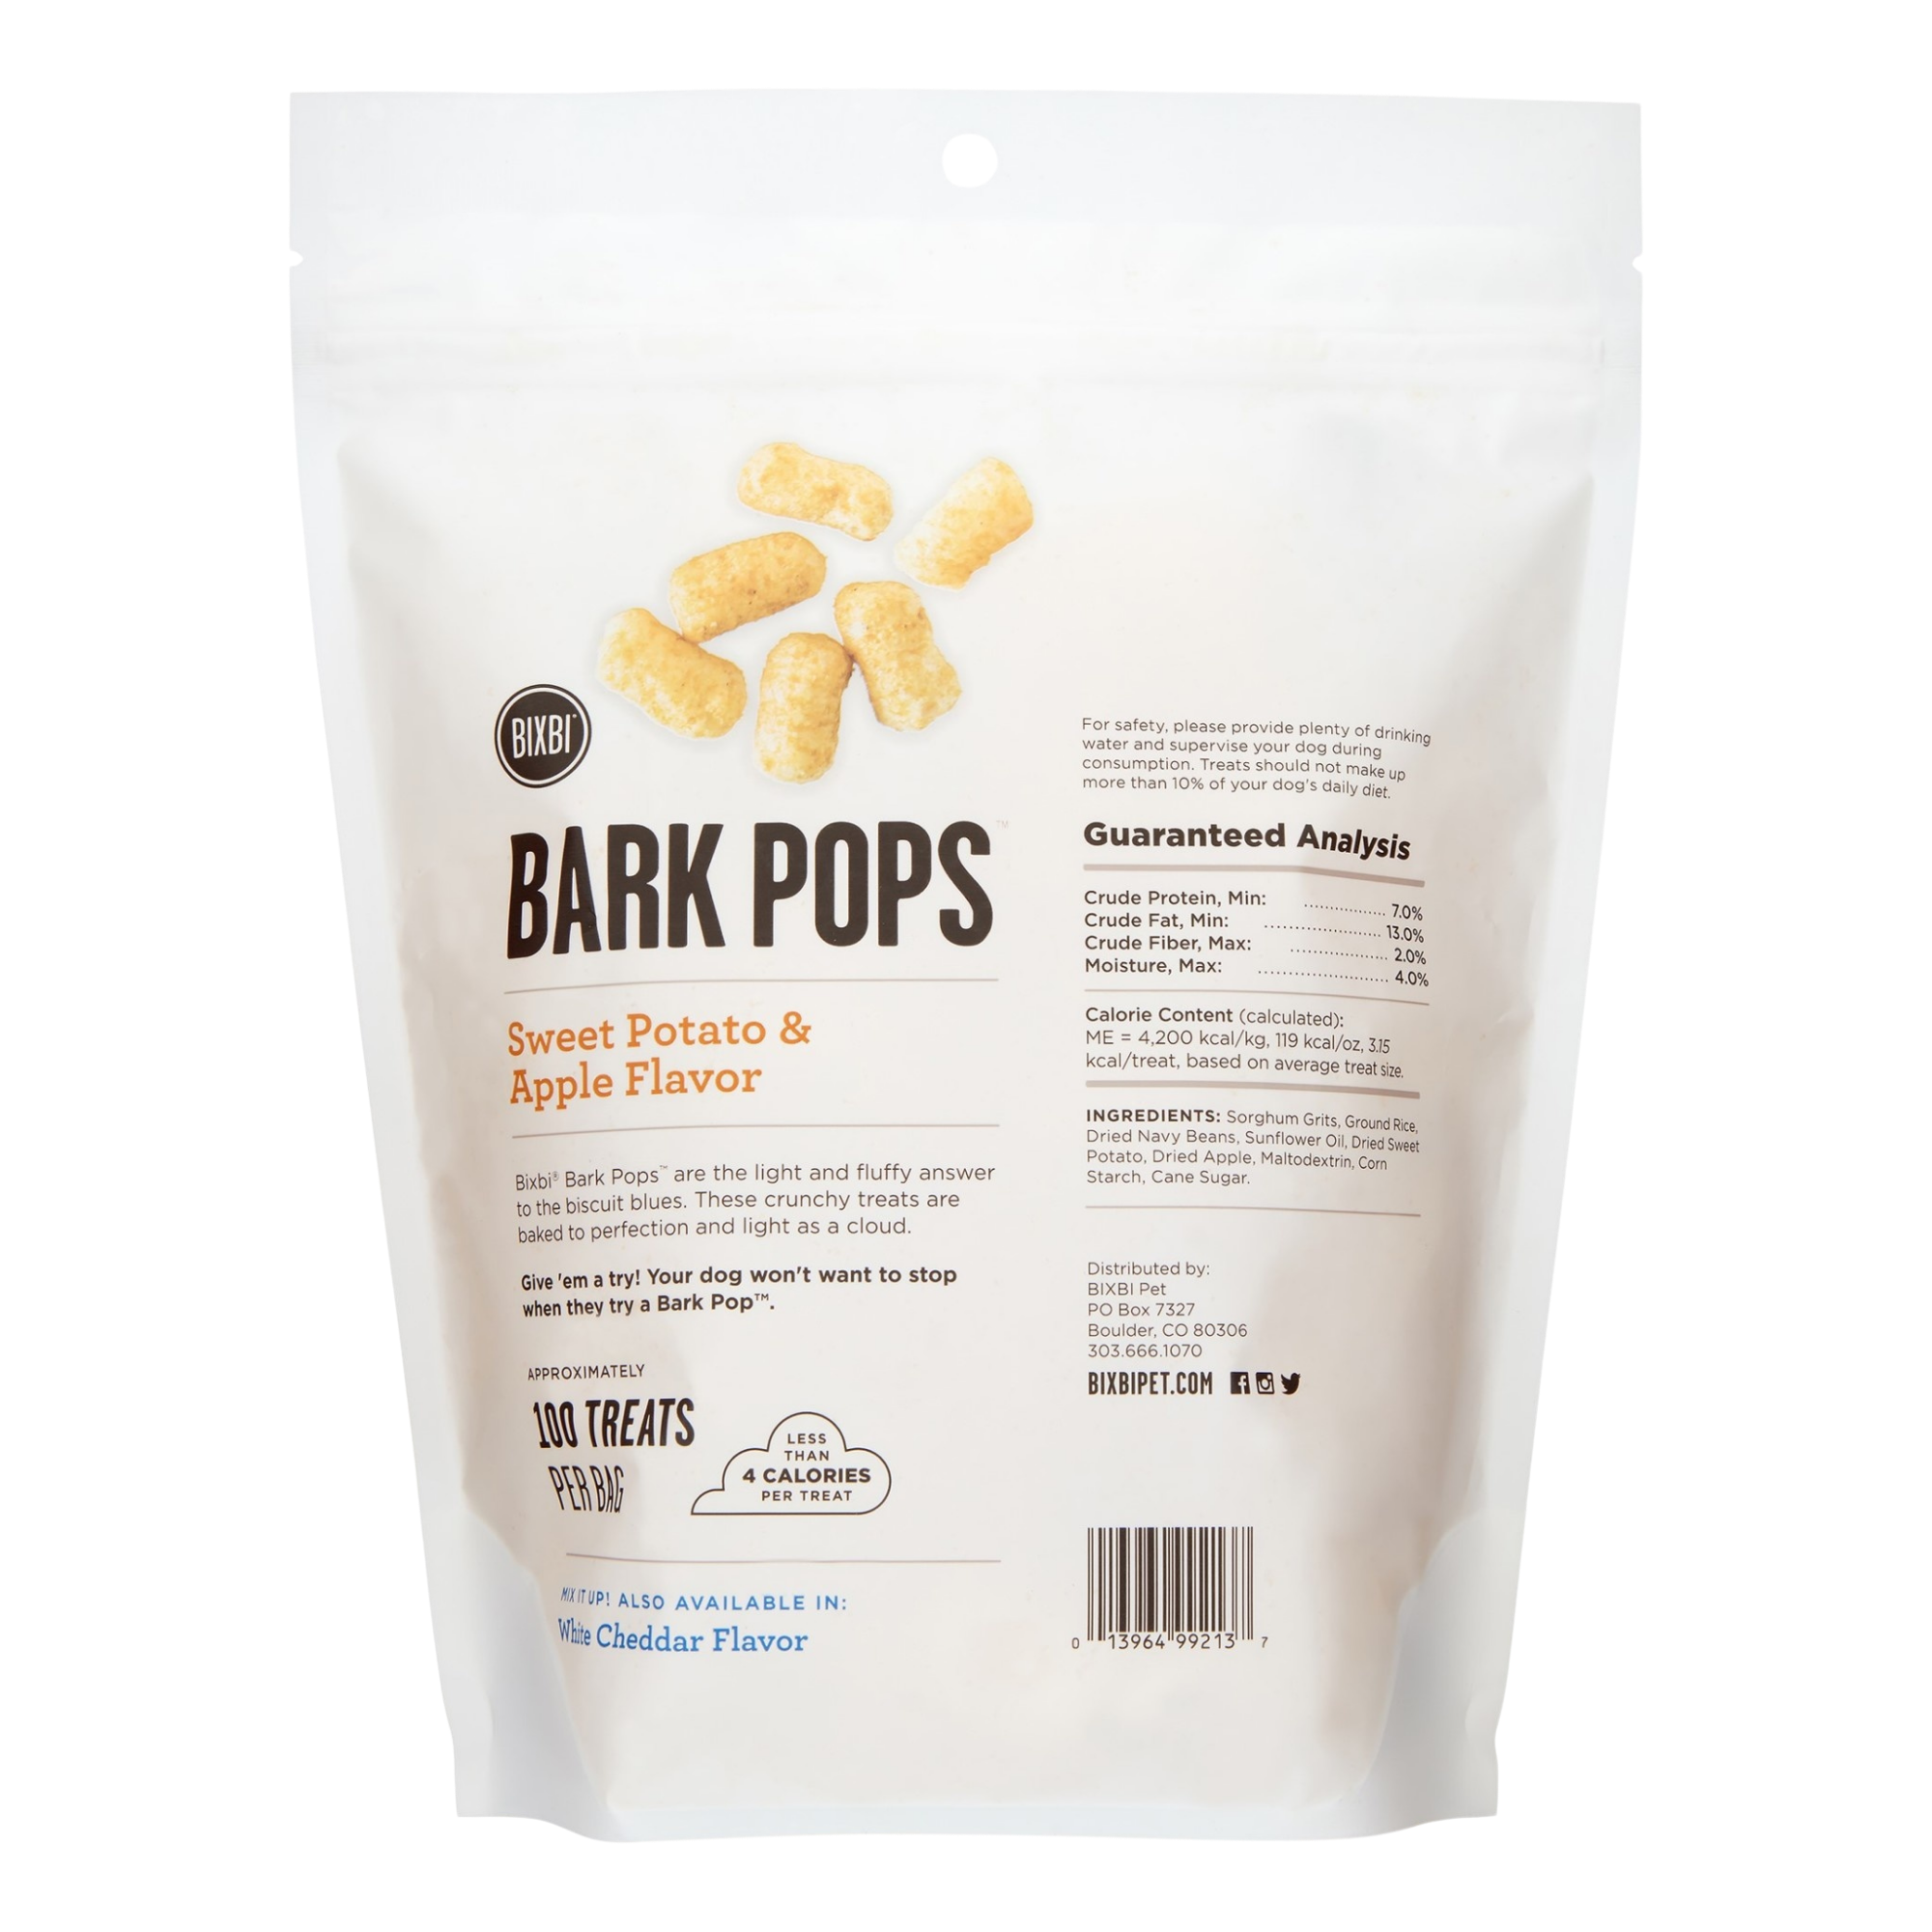 Bixbi Bark Pops Sweet Potato & Apple Flavor Light & Crunchy Dog Treats, 4-oz bag - Mutts & Co.